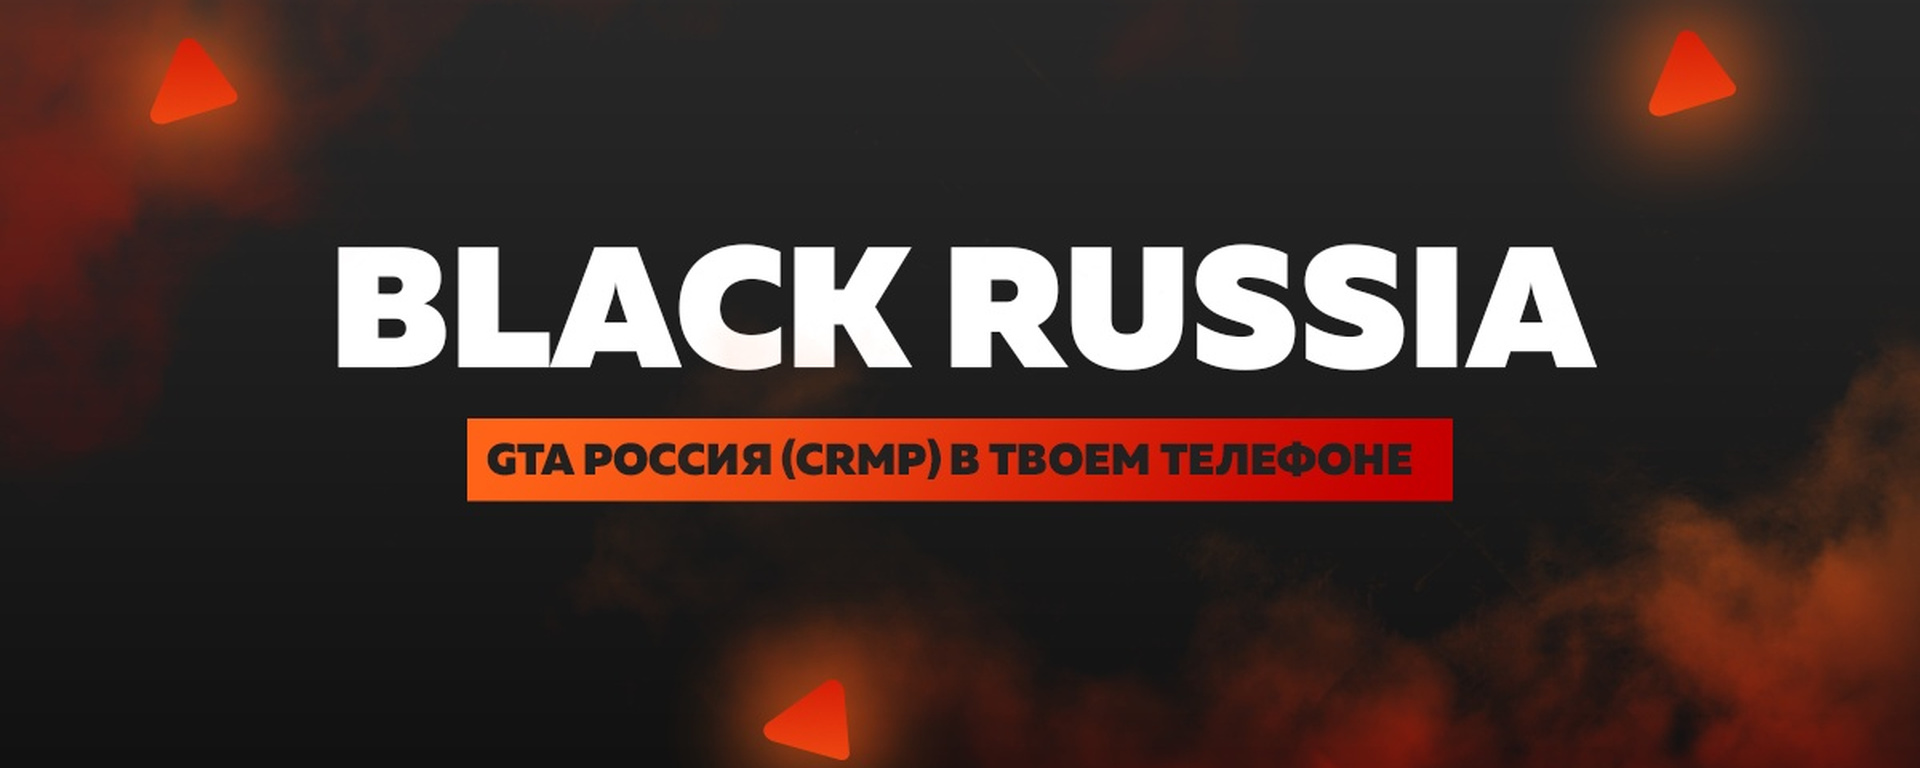 BLACK RUSSIA 13.0.6 МОД (MENU, СПИДХАК, БЕССМЕРТИЕ, ПАТРОНЫ)